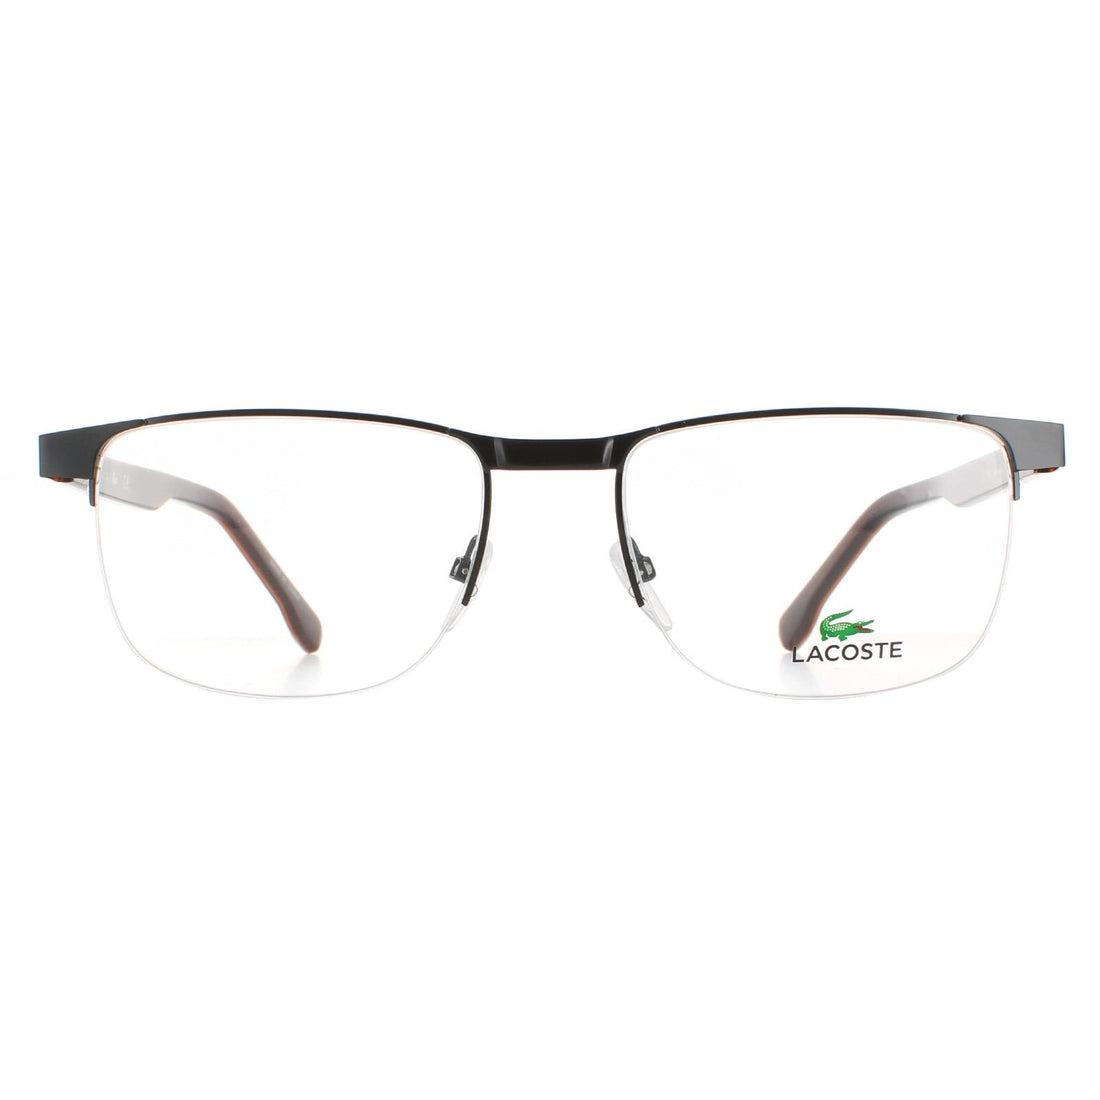 Lacoste L2248 Glasses Frames Black